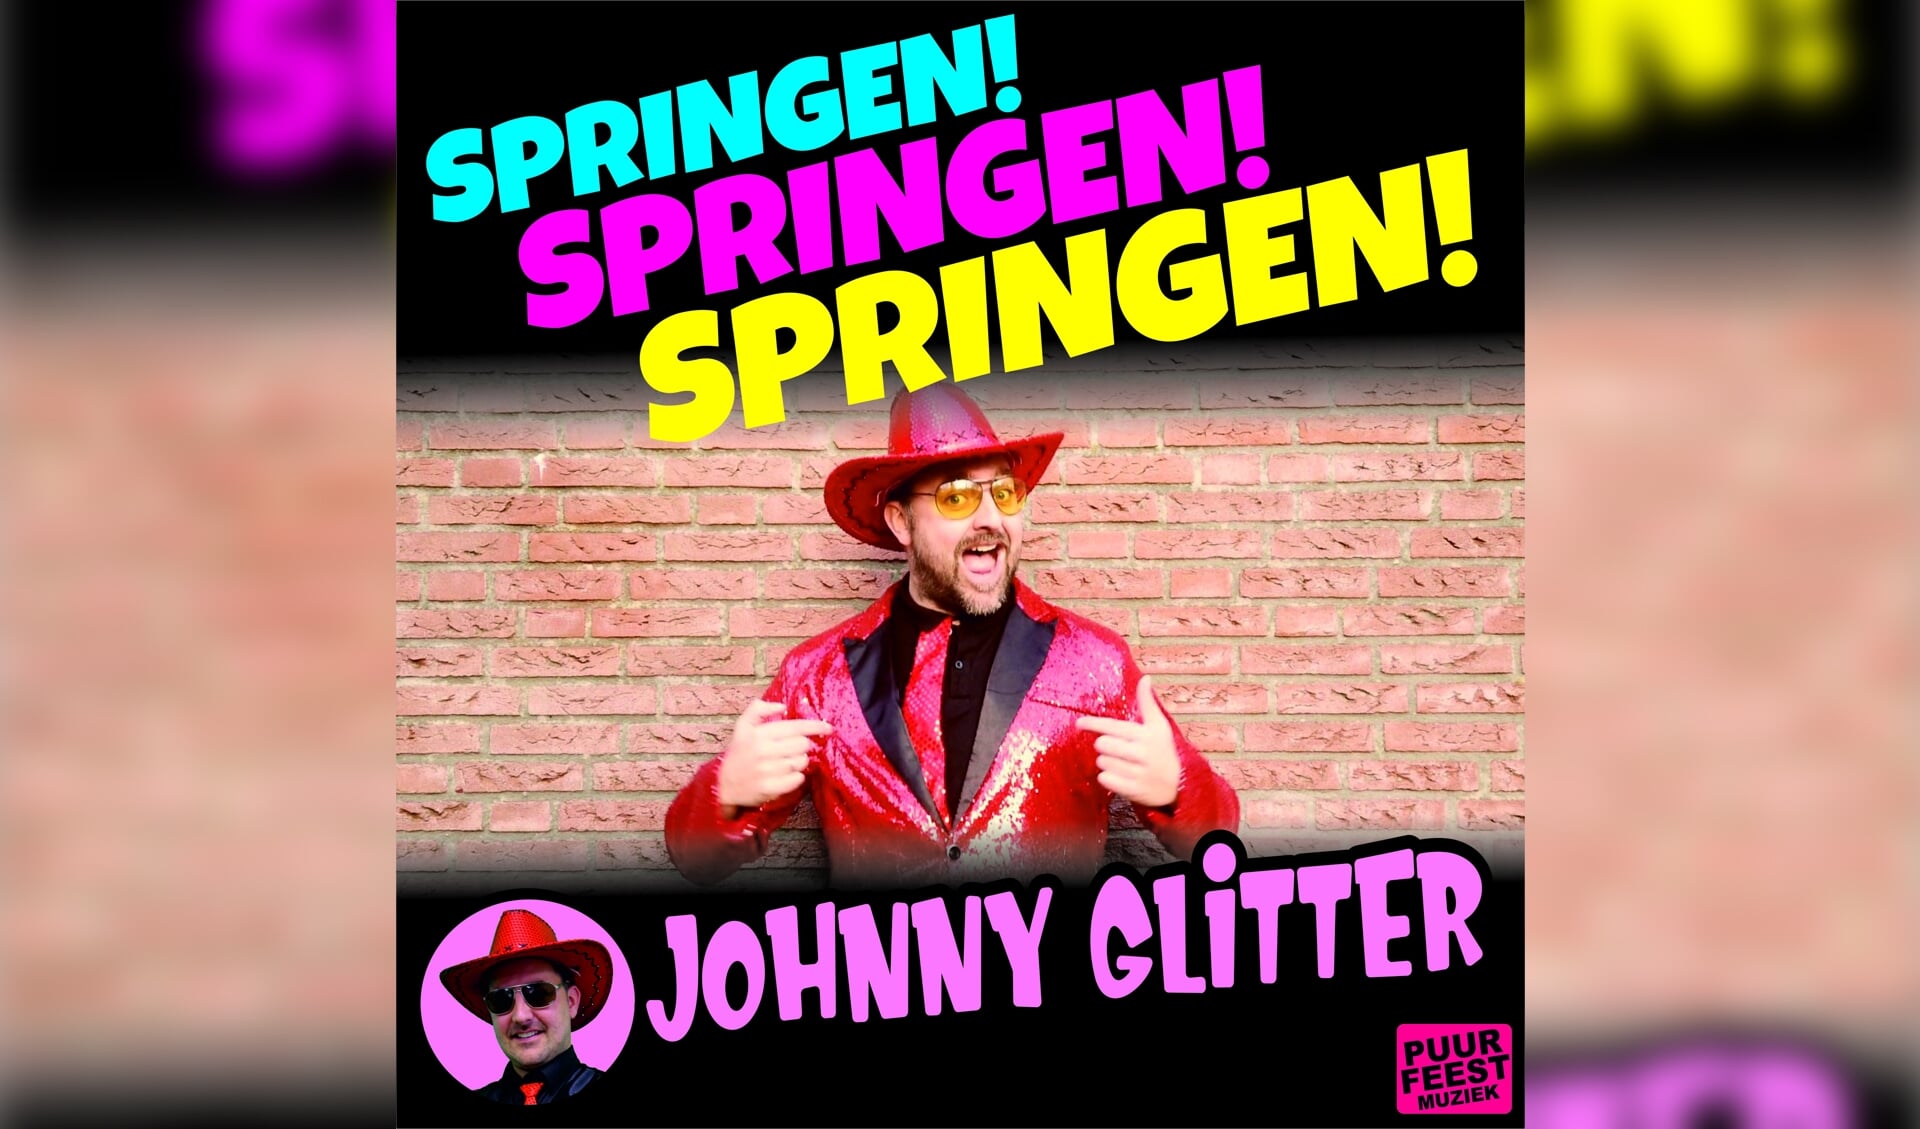 Party artiest Johnny Glitter